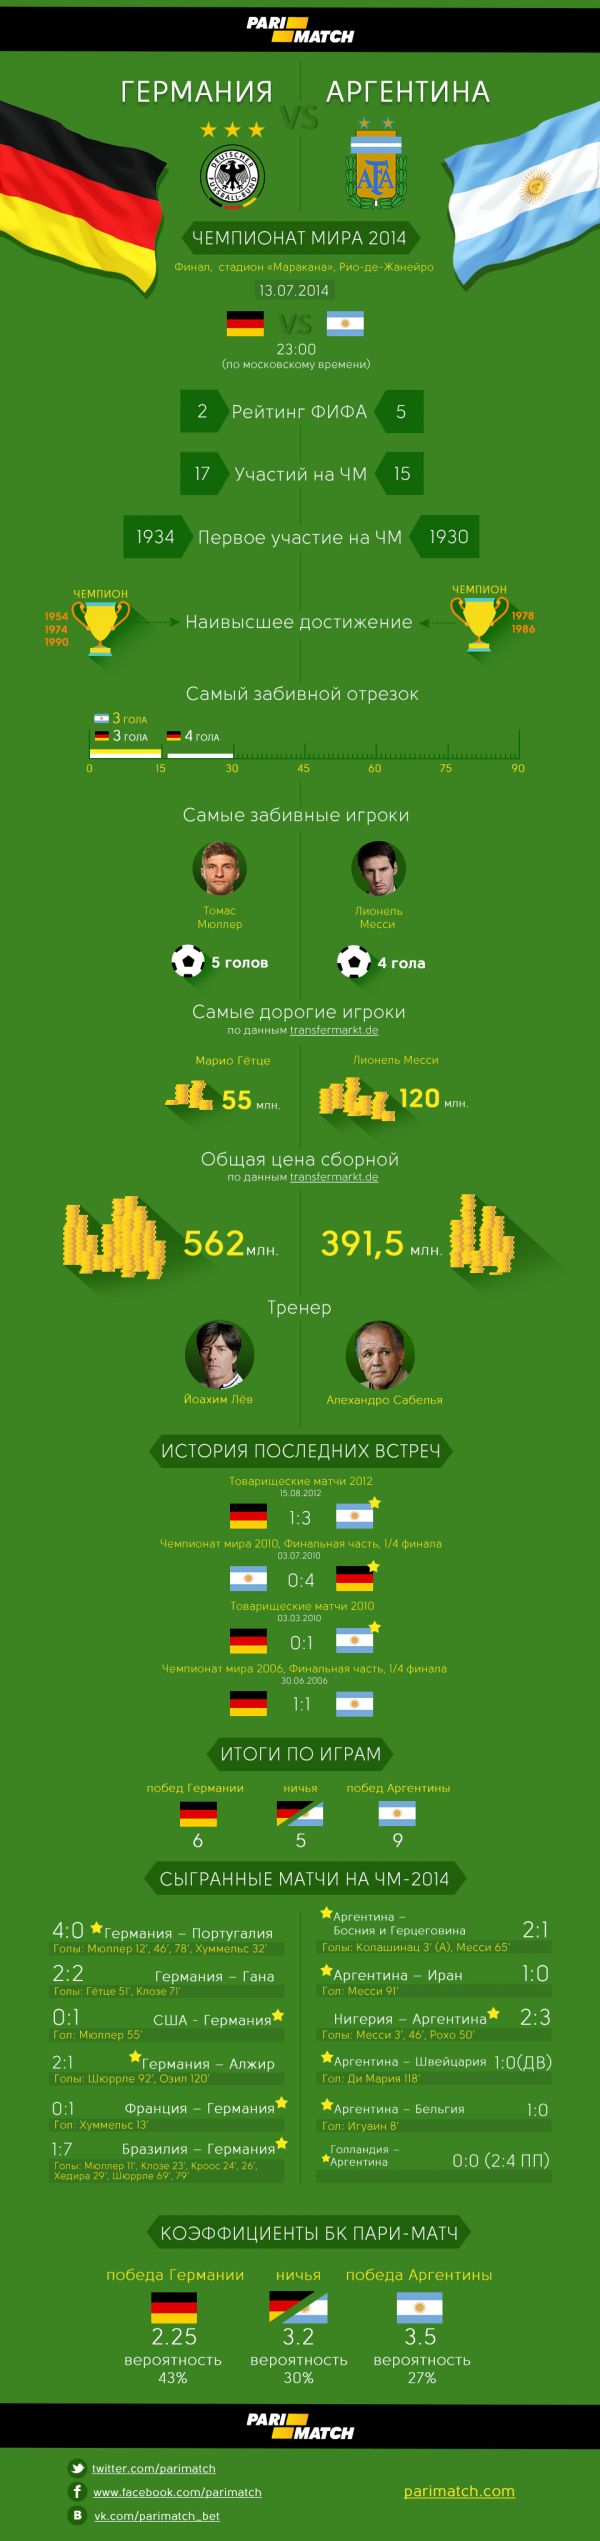 infographic_germaniya_argentina.jpg